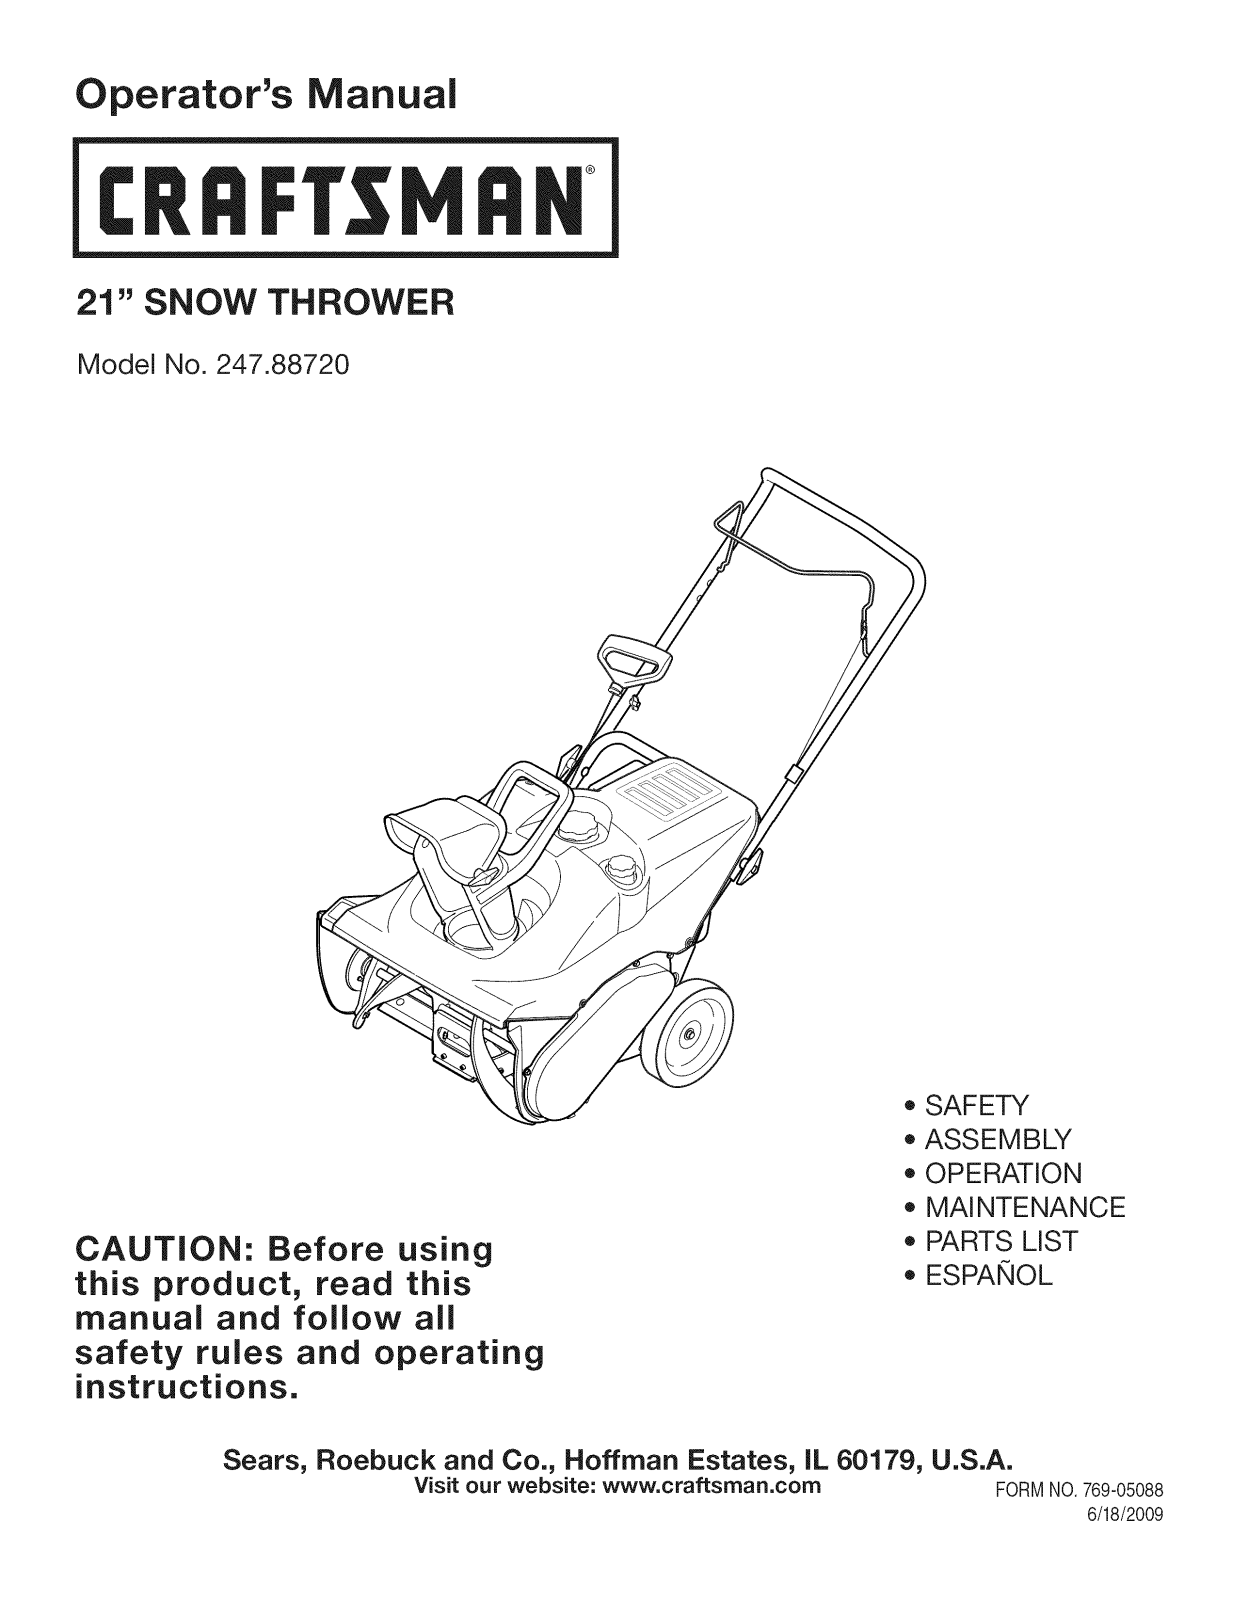 Craftsman 247887200 Owner’s Manual